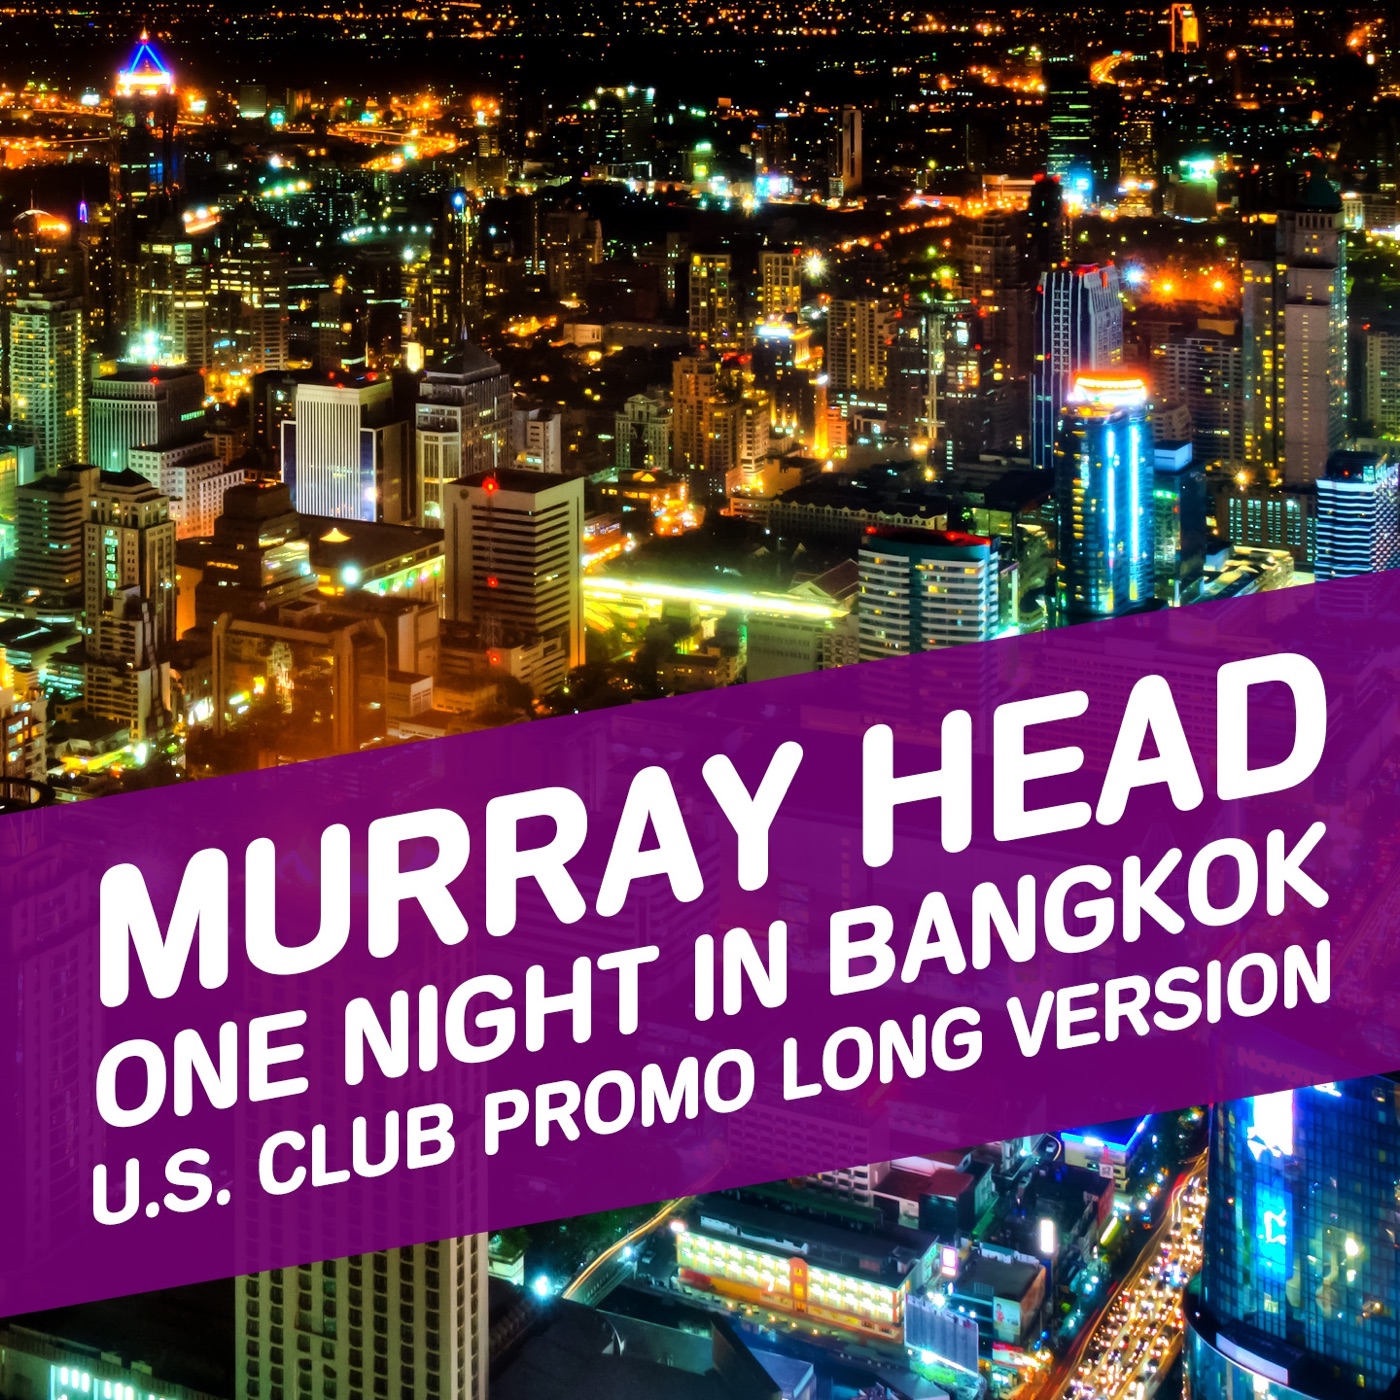 az_3614_One Night in Bangkok (U.S. Club Promo Long version Remix) - Single_Murray Head